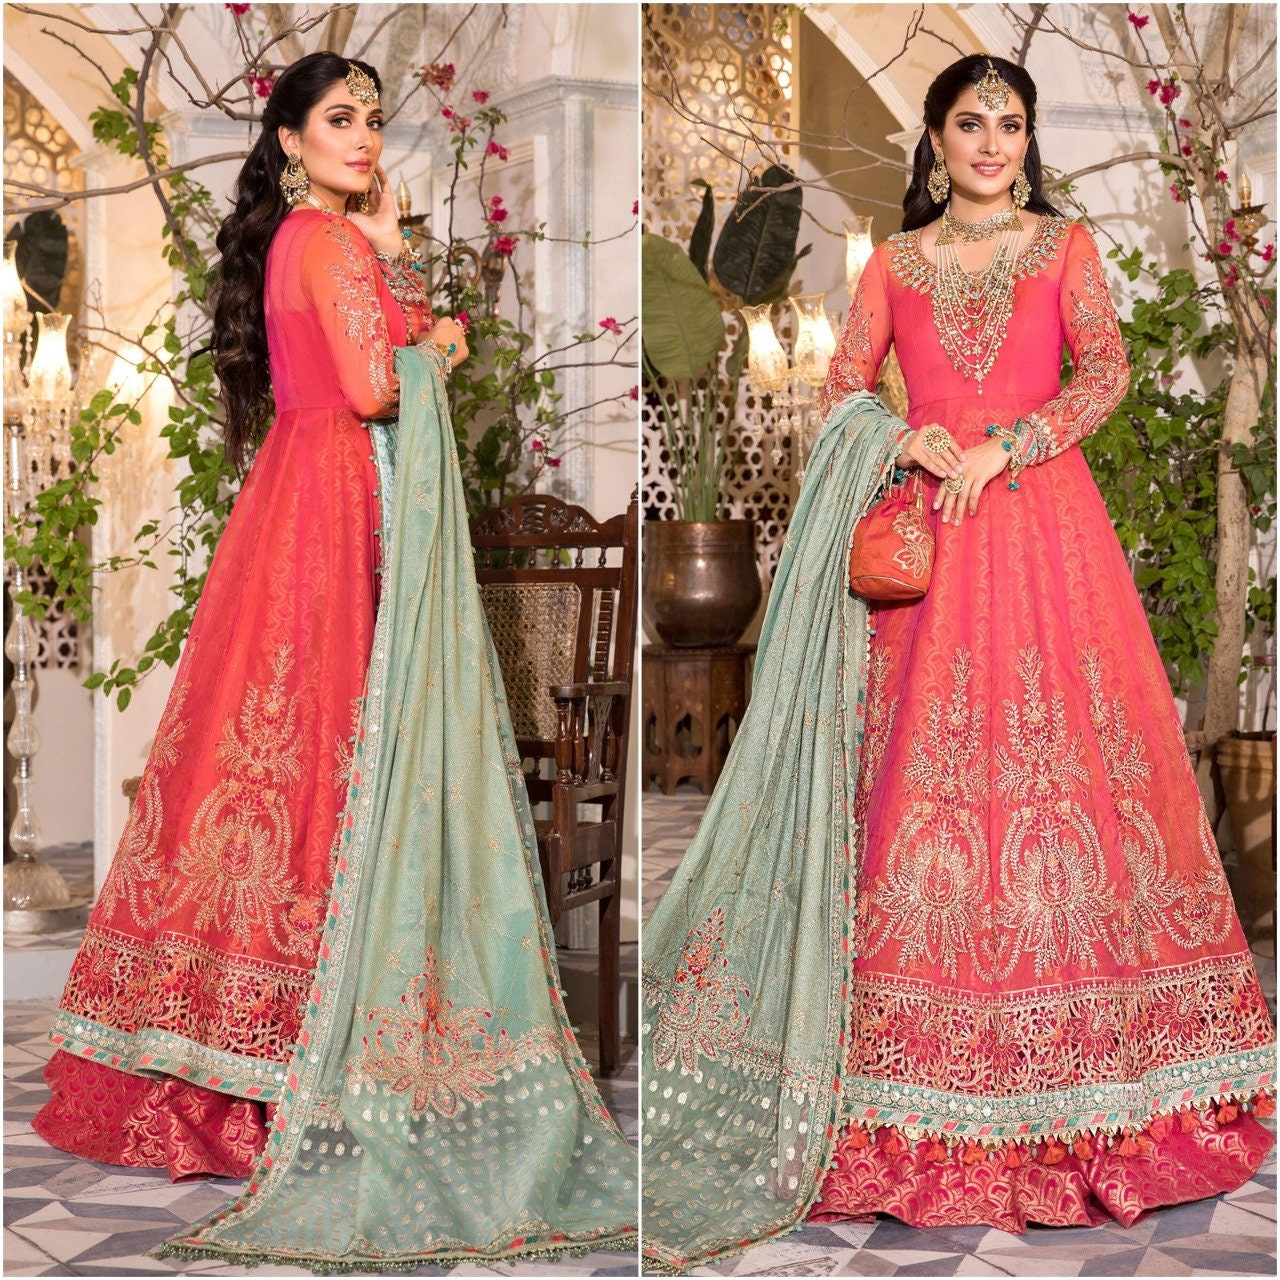 Latest Pakistani Indian Wedding Dresses Maxi Long Frock Pink ...